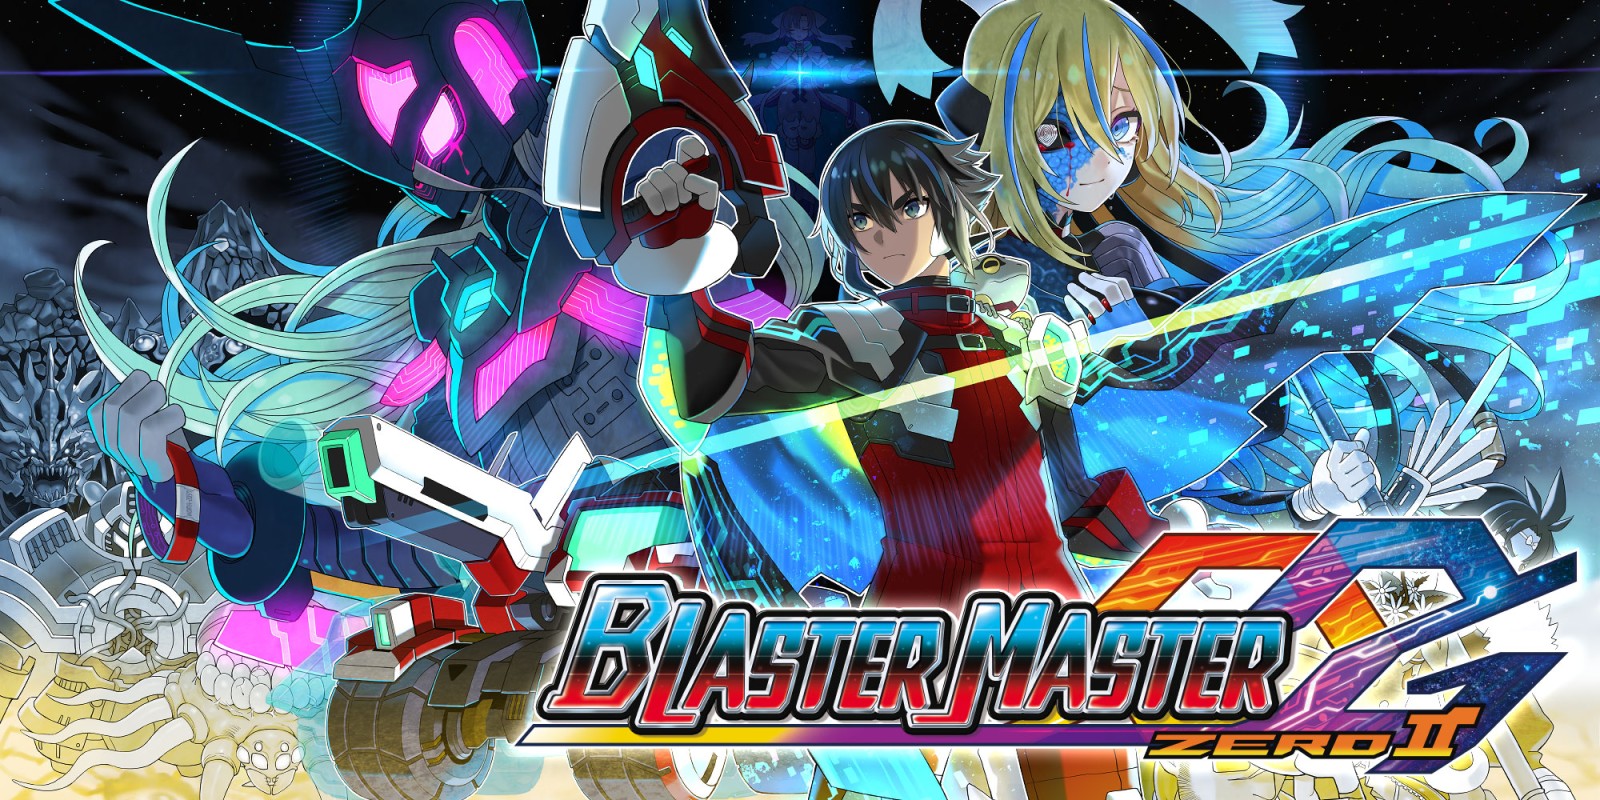 Blaster Master Zero 2 | Salve a Waifu, Salve o Universo!